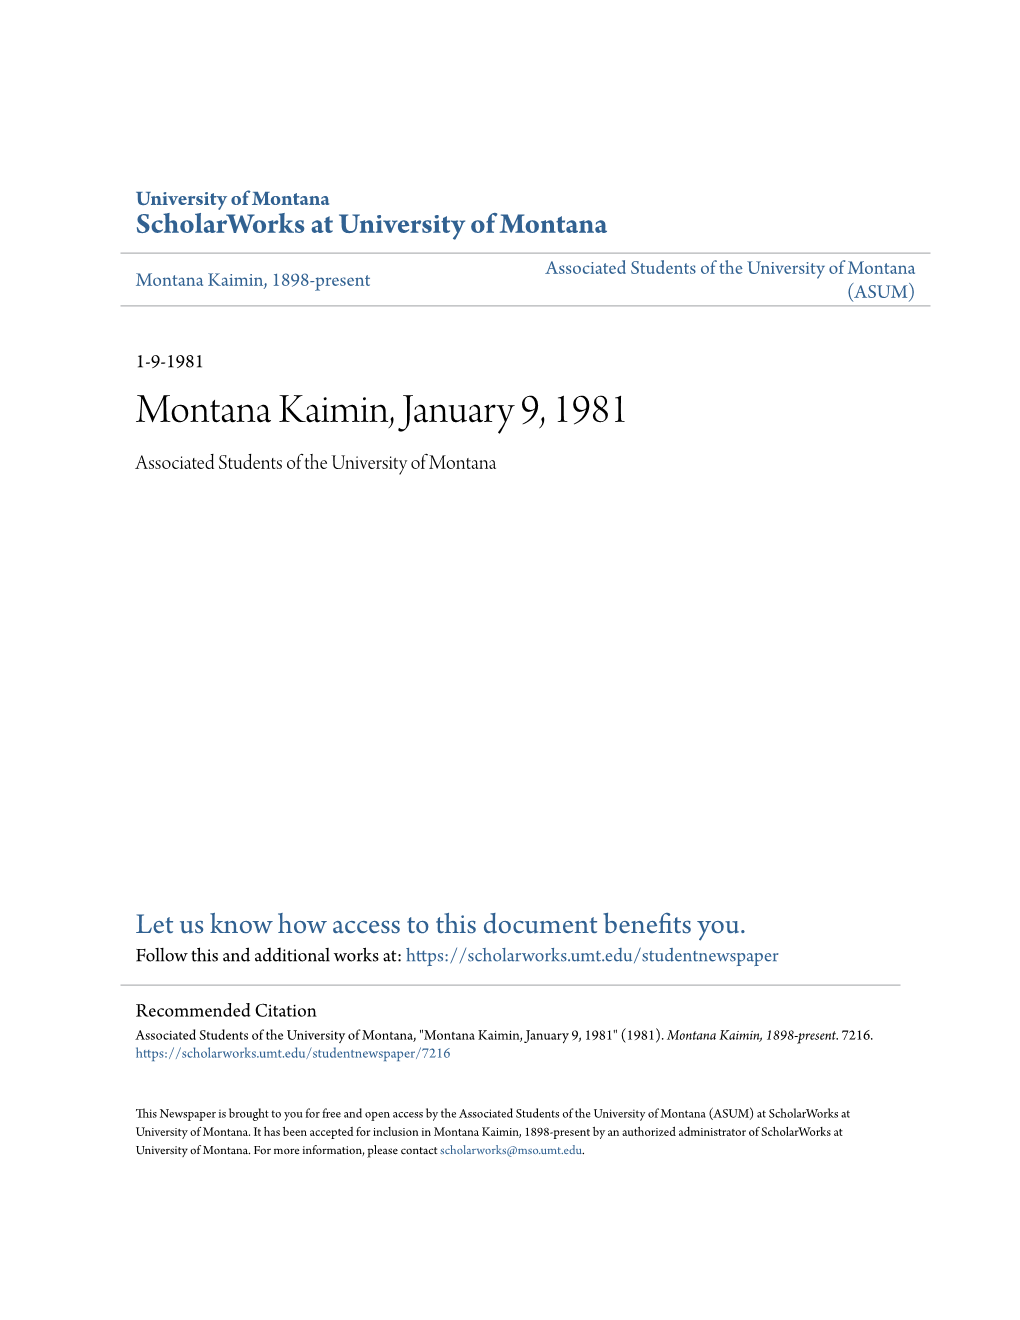 Montana Kaimin, January 9, 1981 Associated Students of the University of Montana